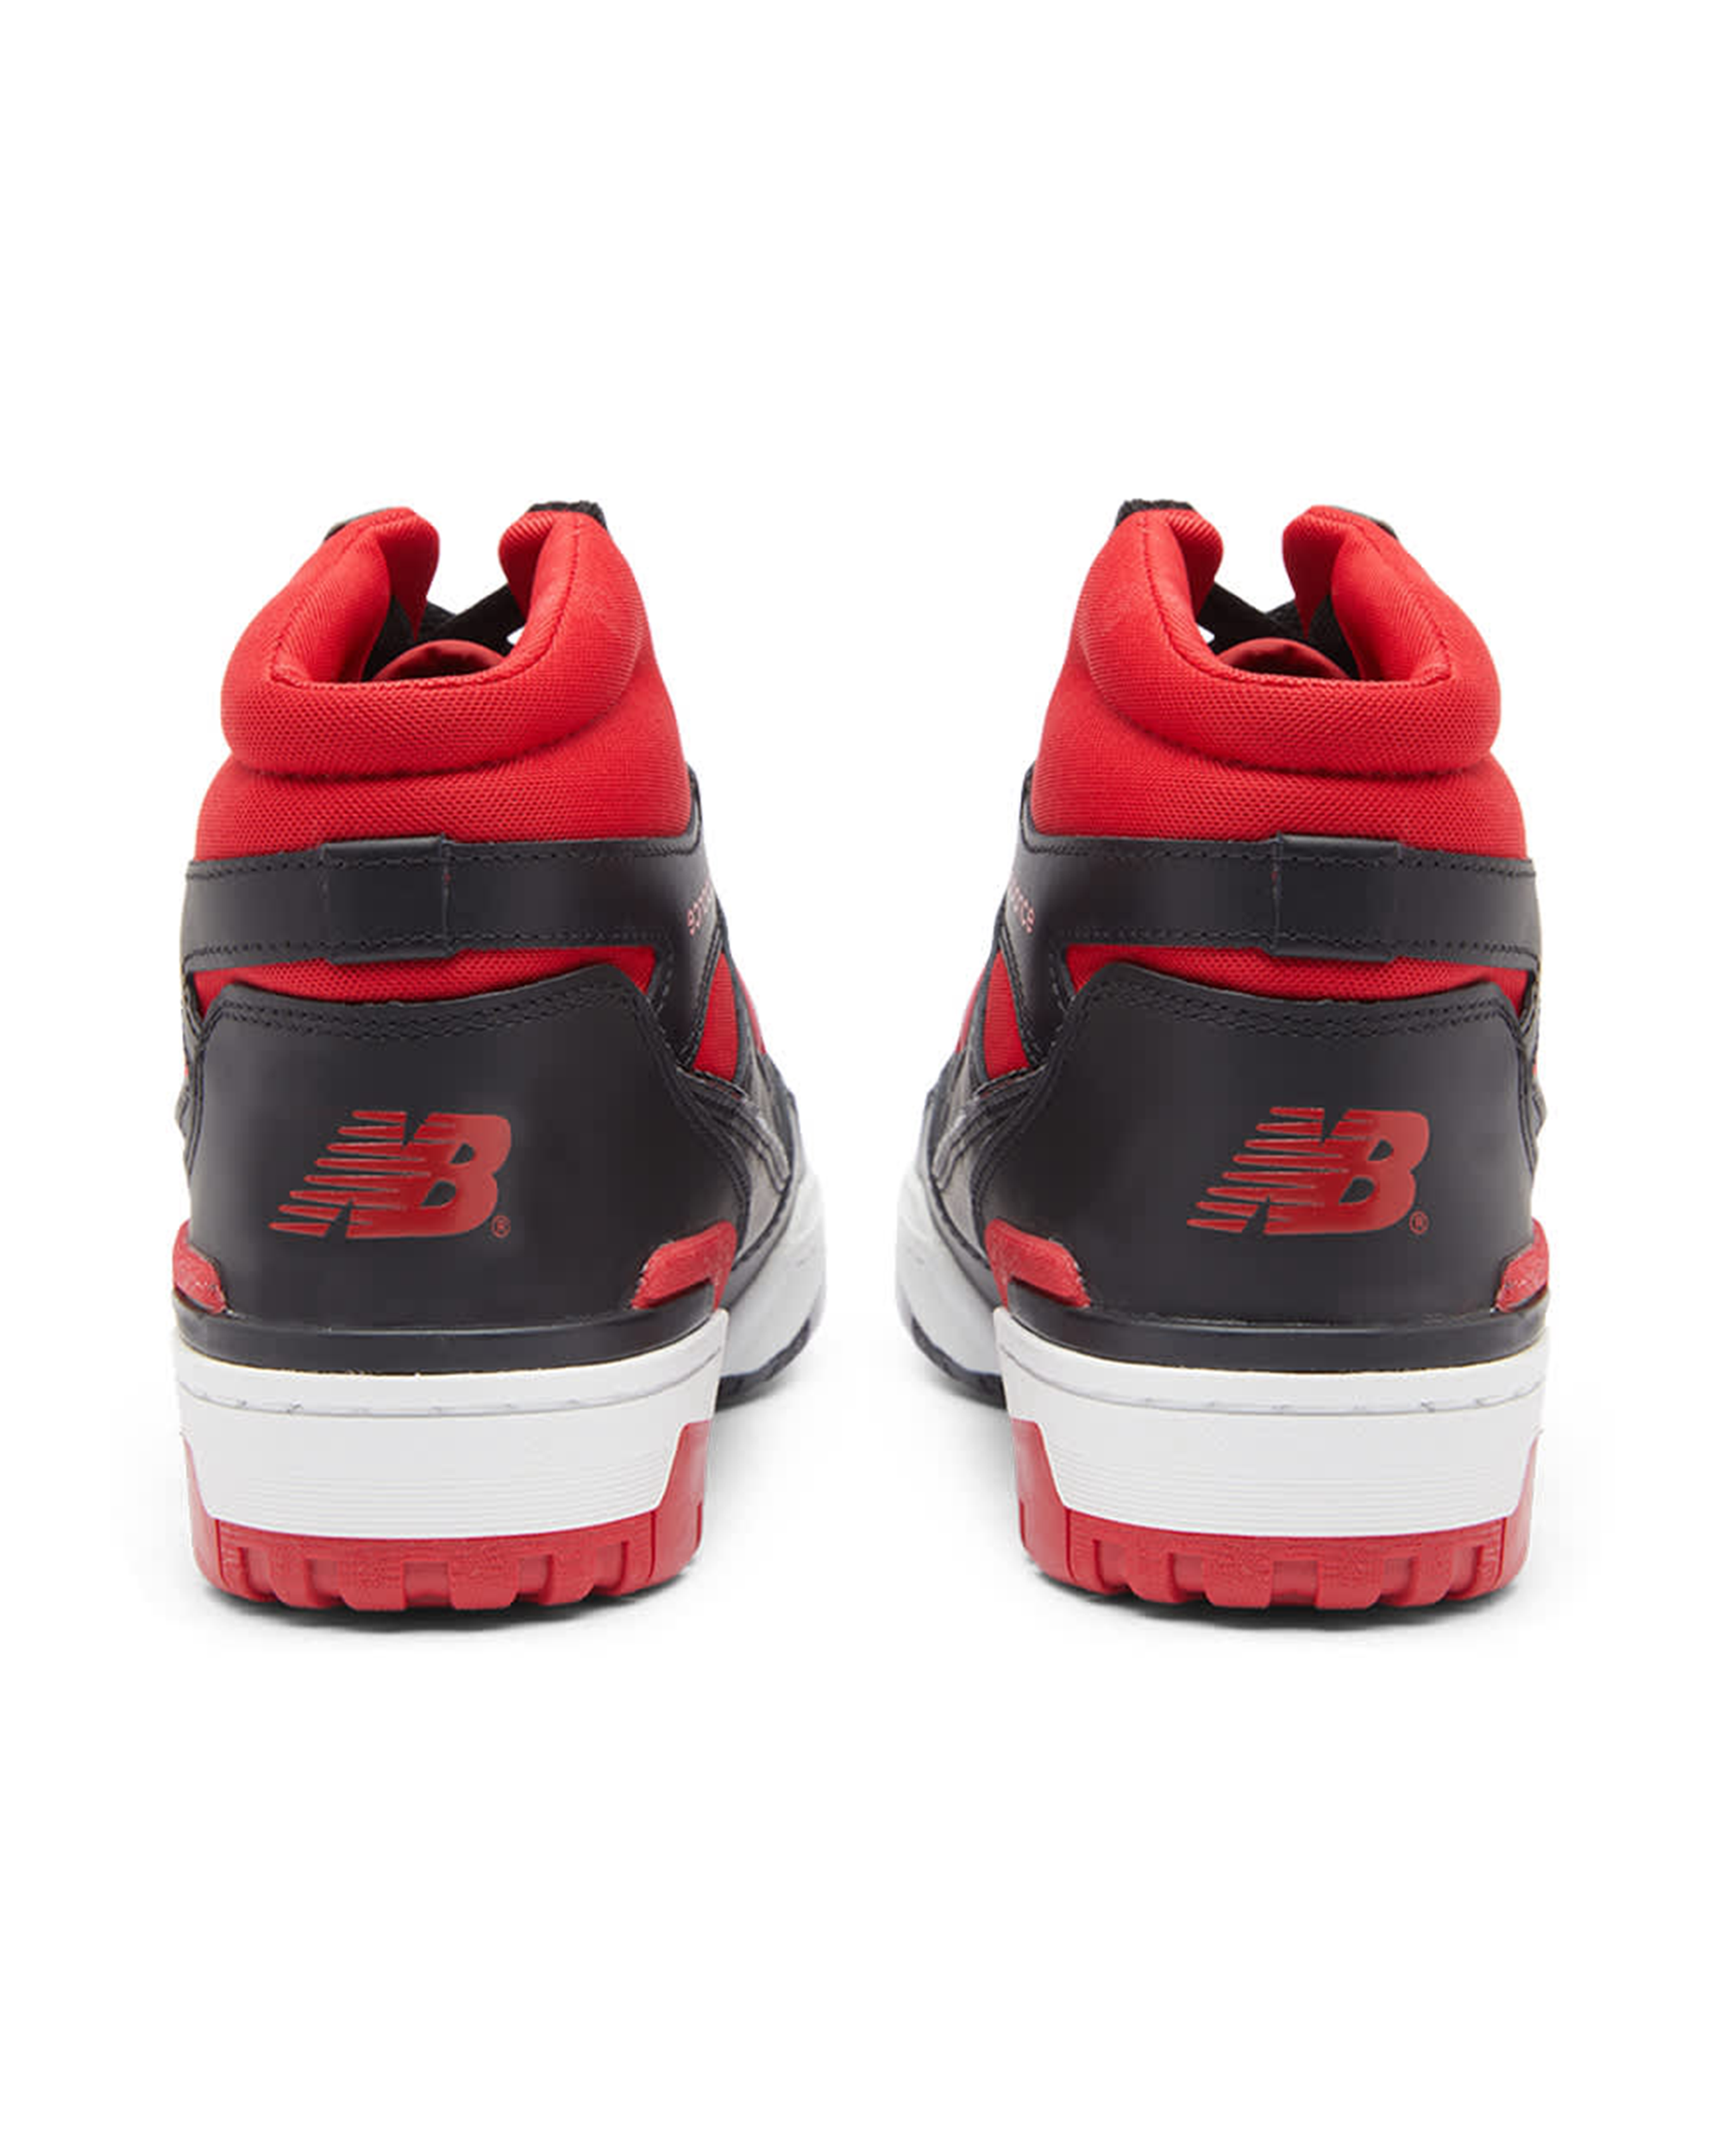 BB650RBR - Black / Red